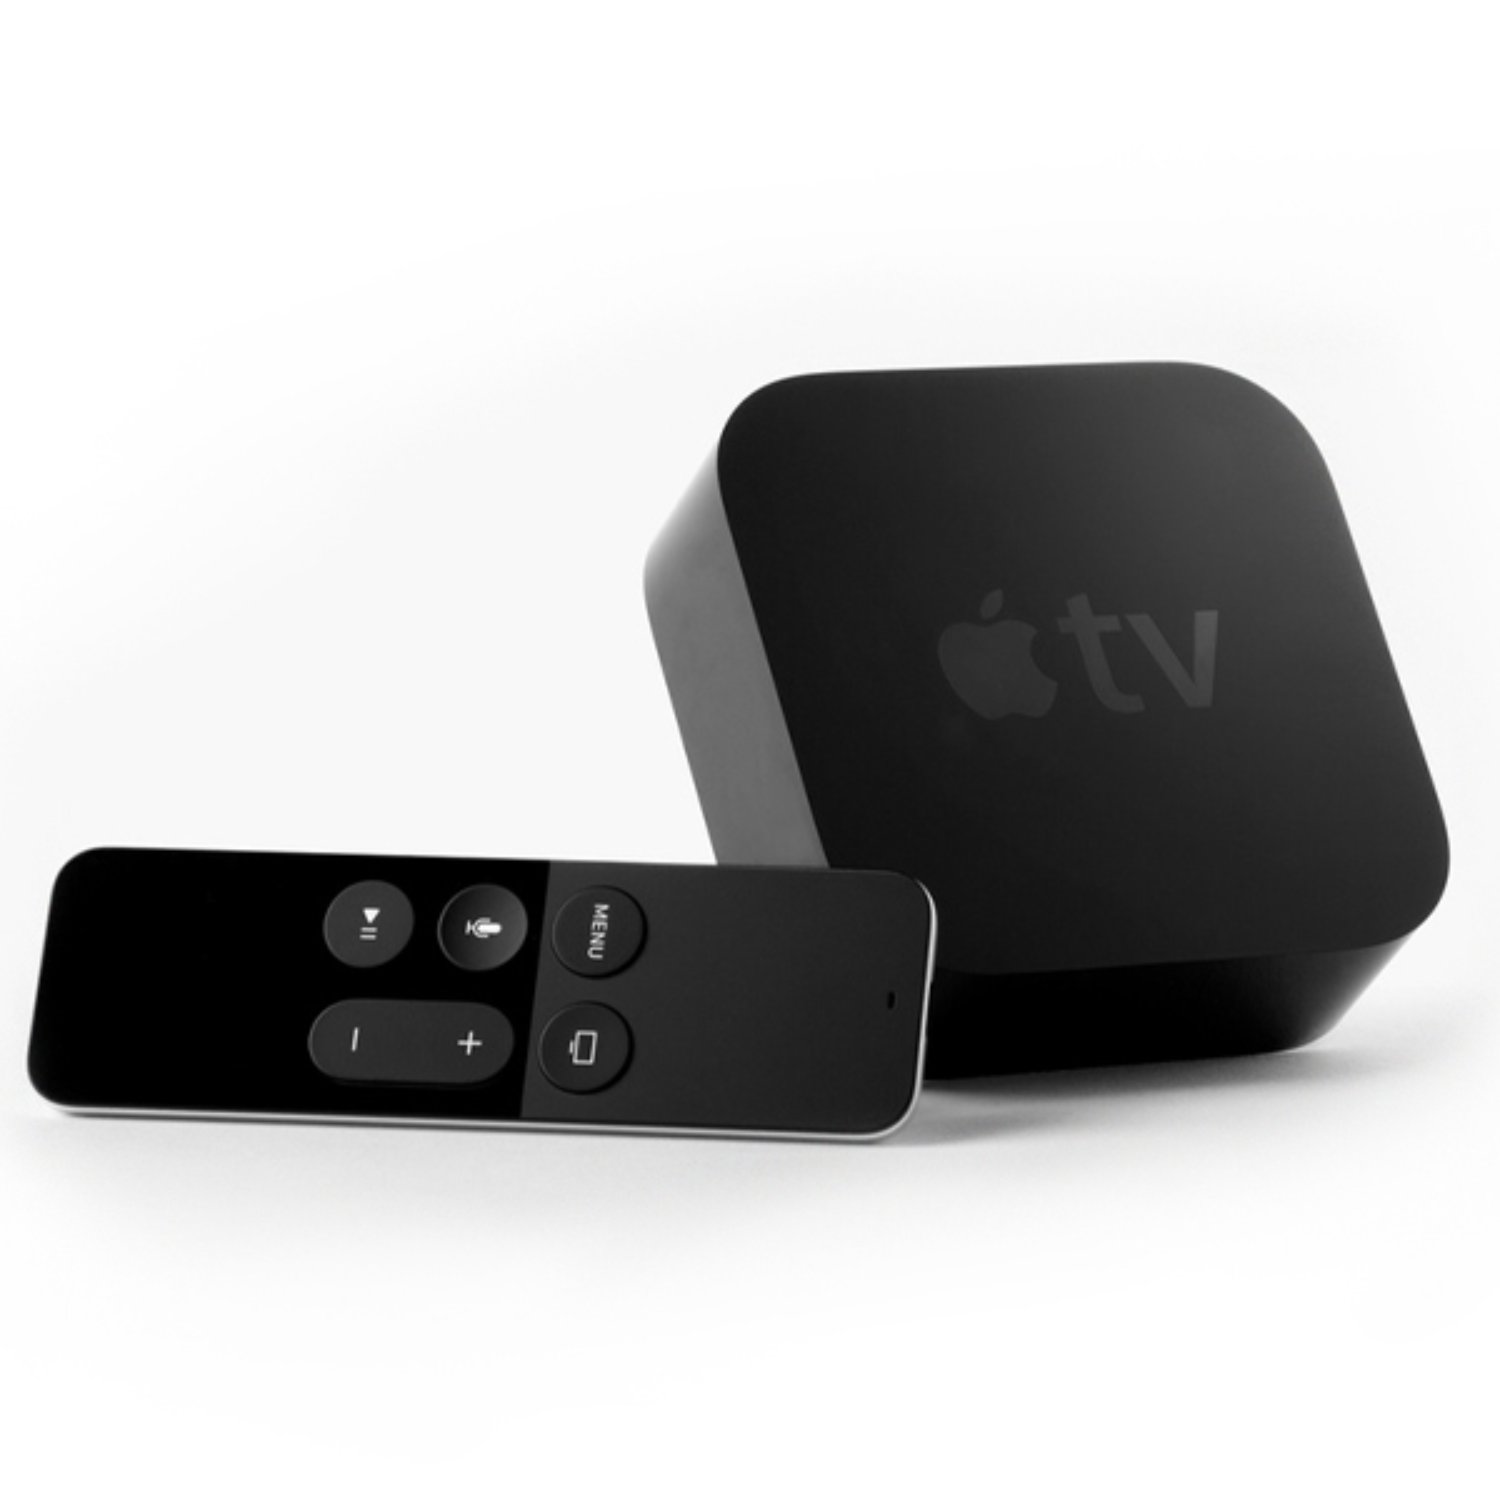 اپل تی وی 1080P HD نسل چهارم 32گیگ وایفای+اترنت Apple TV 1080P HD (4rd Gen) wifi With ethernet 32GB 2015 MHY93 